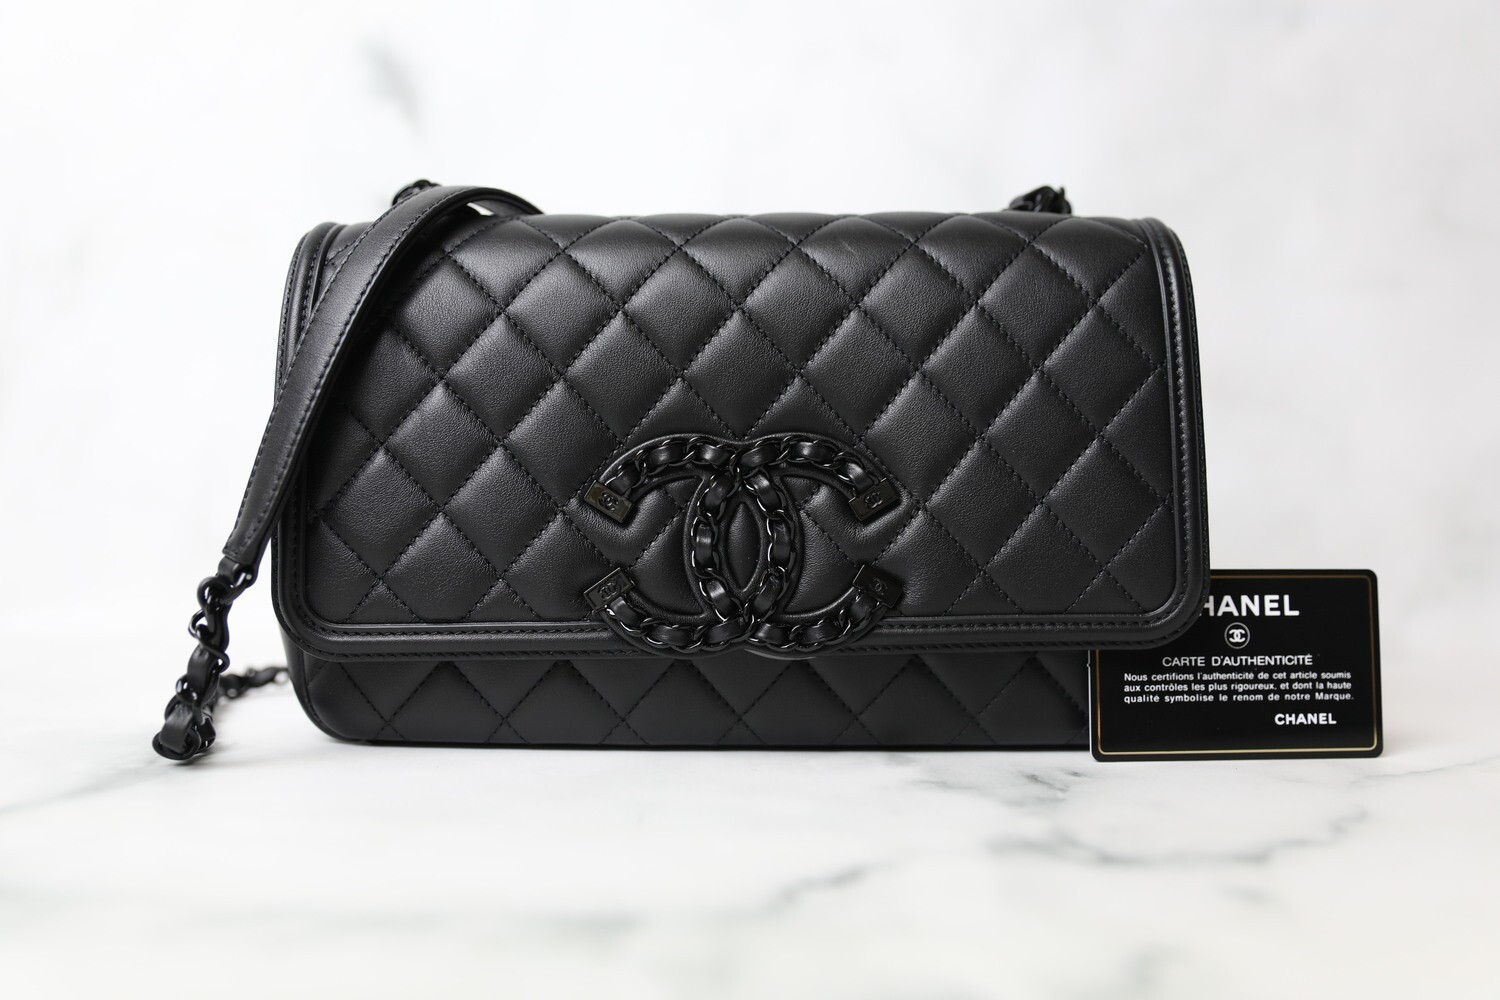 Chanel Filigree Medium So Black Flap Bag, New in Box - Julia Rose Boston